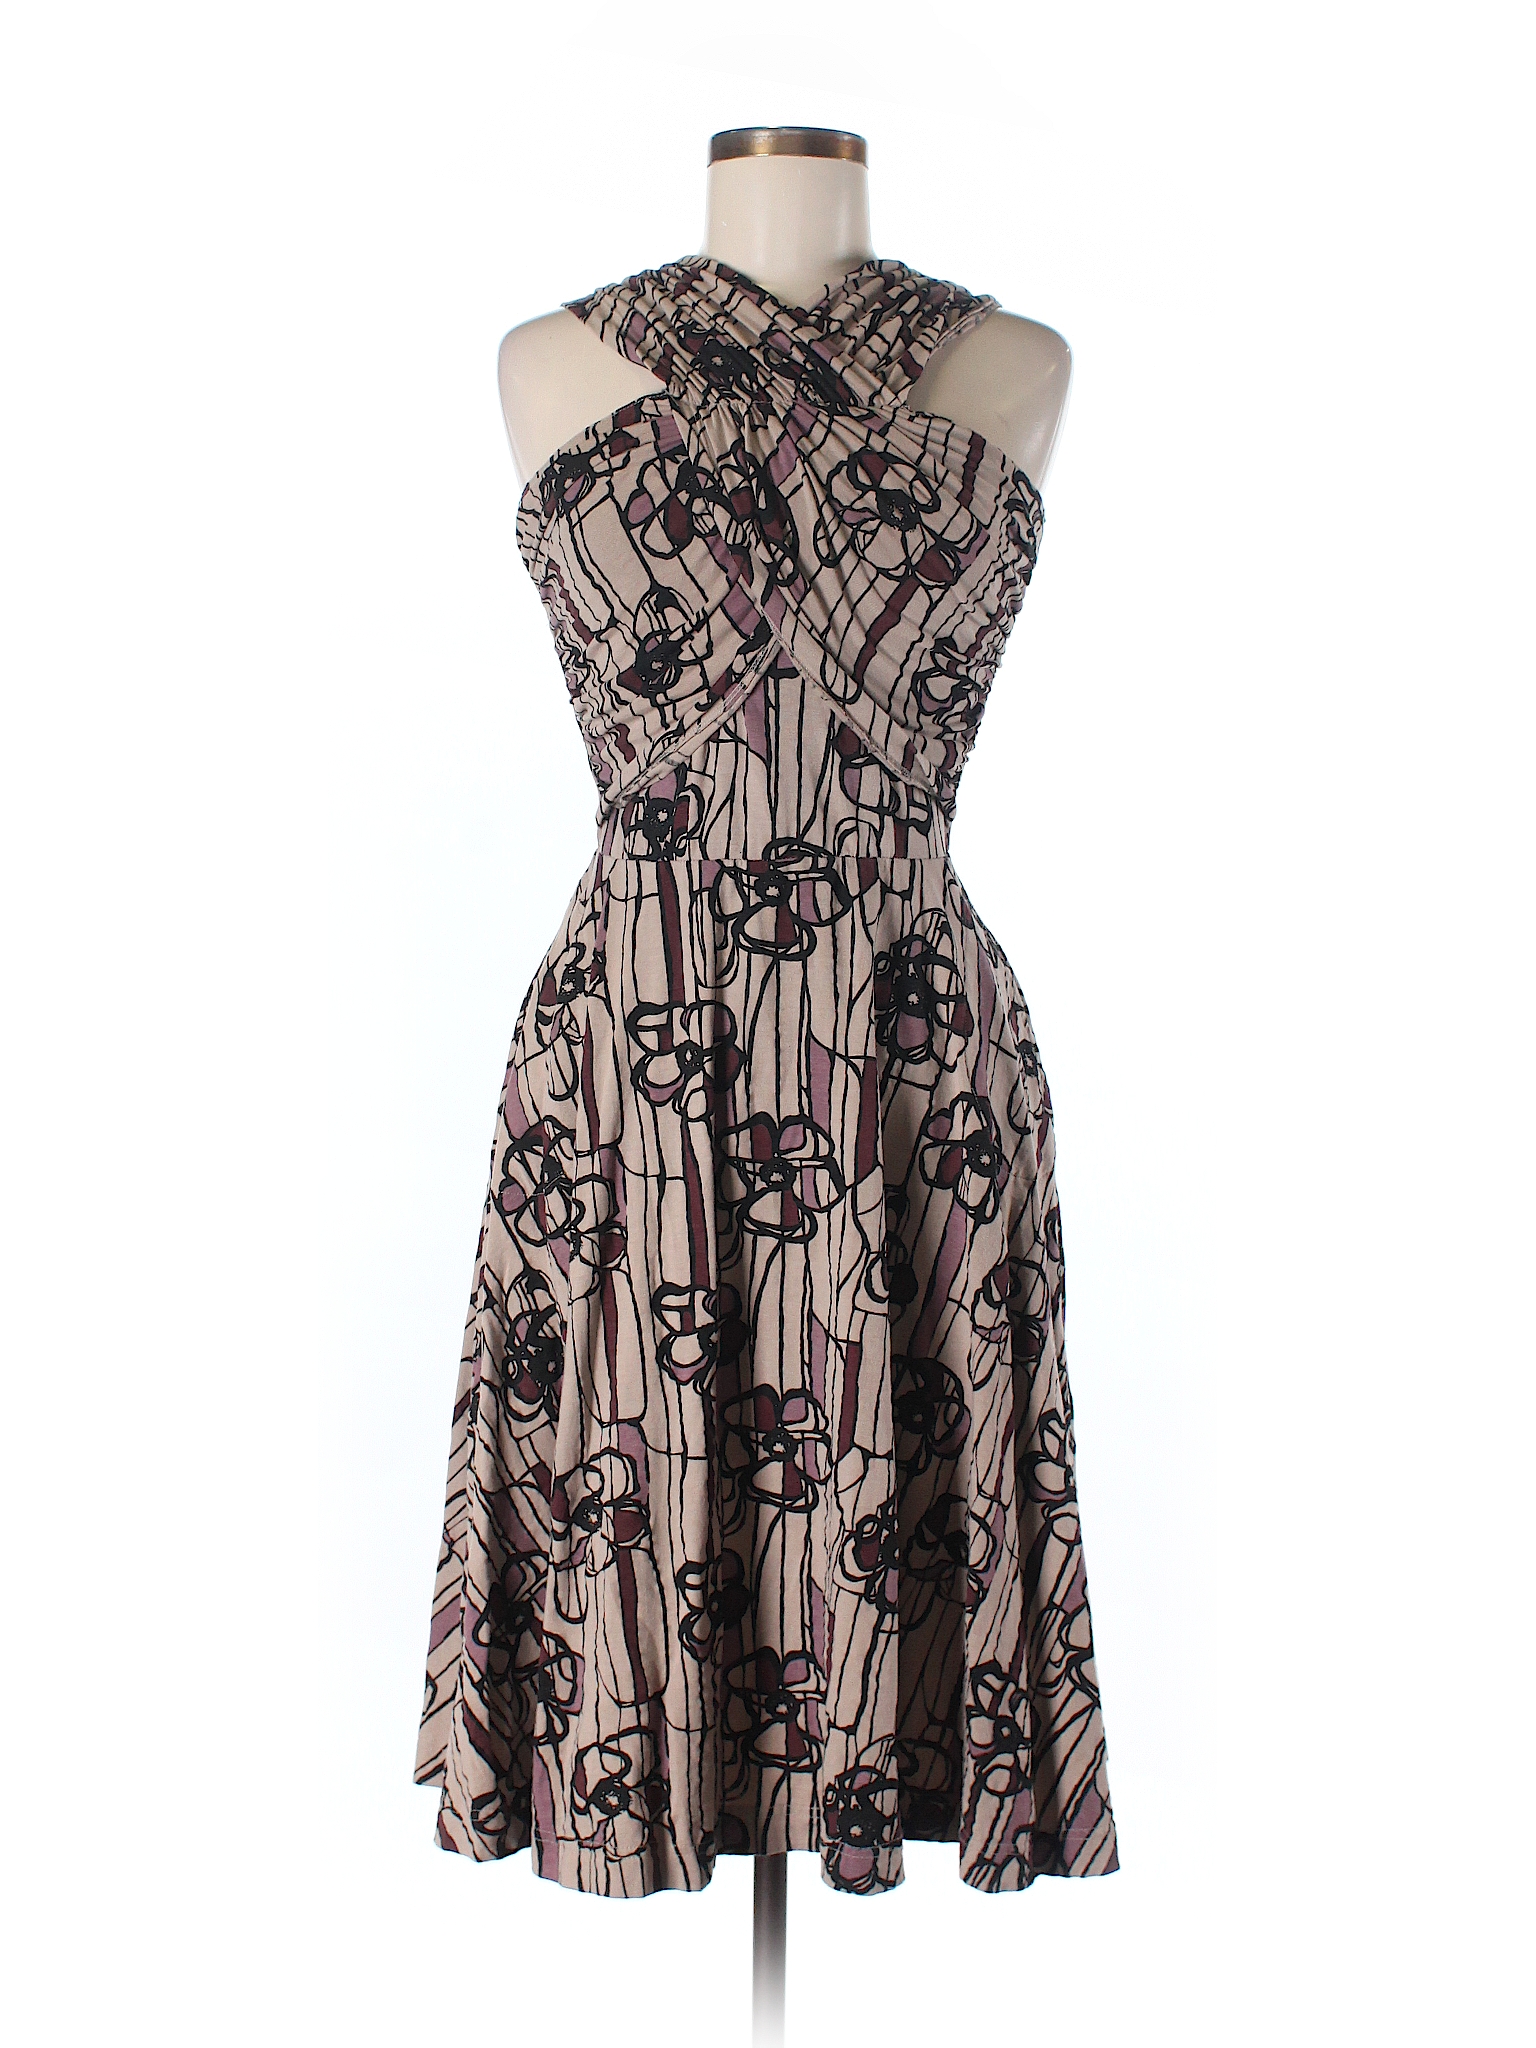 Effie's Heart Print Brown Casual Dress Size M - 68% off | thredUP